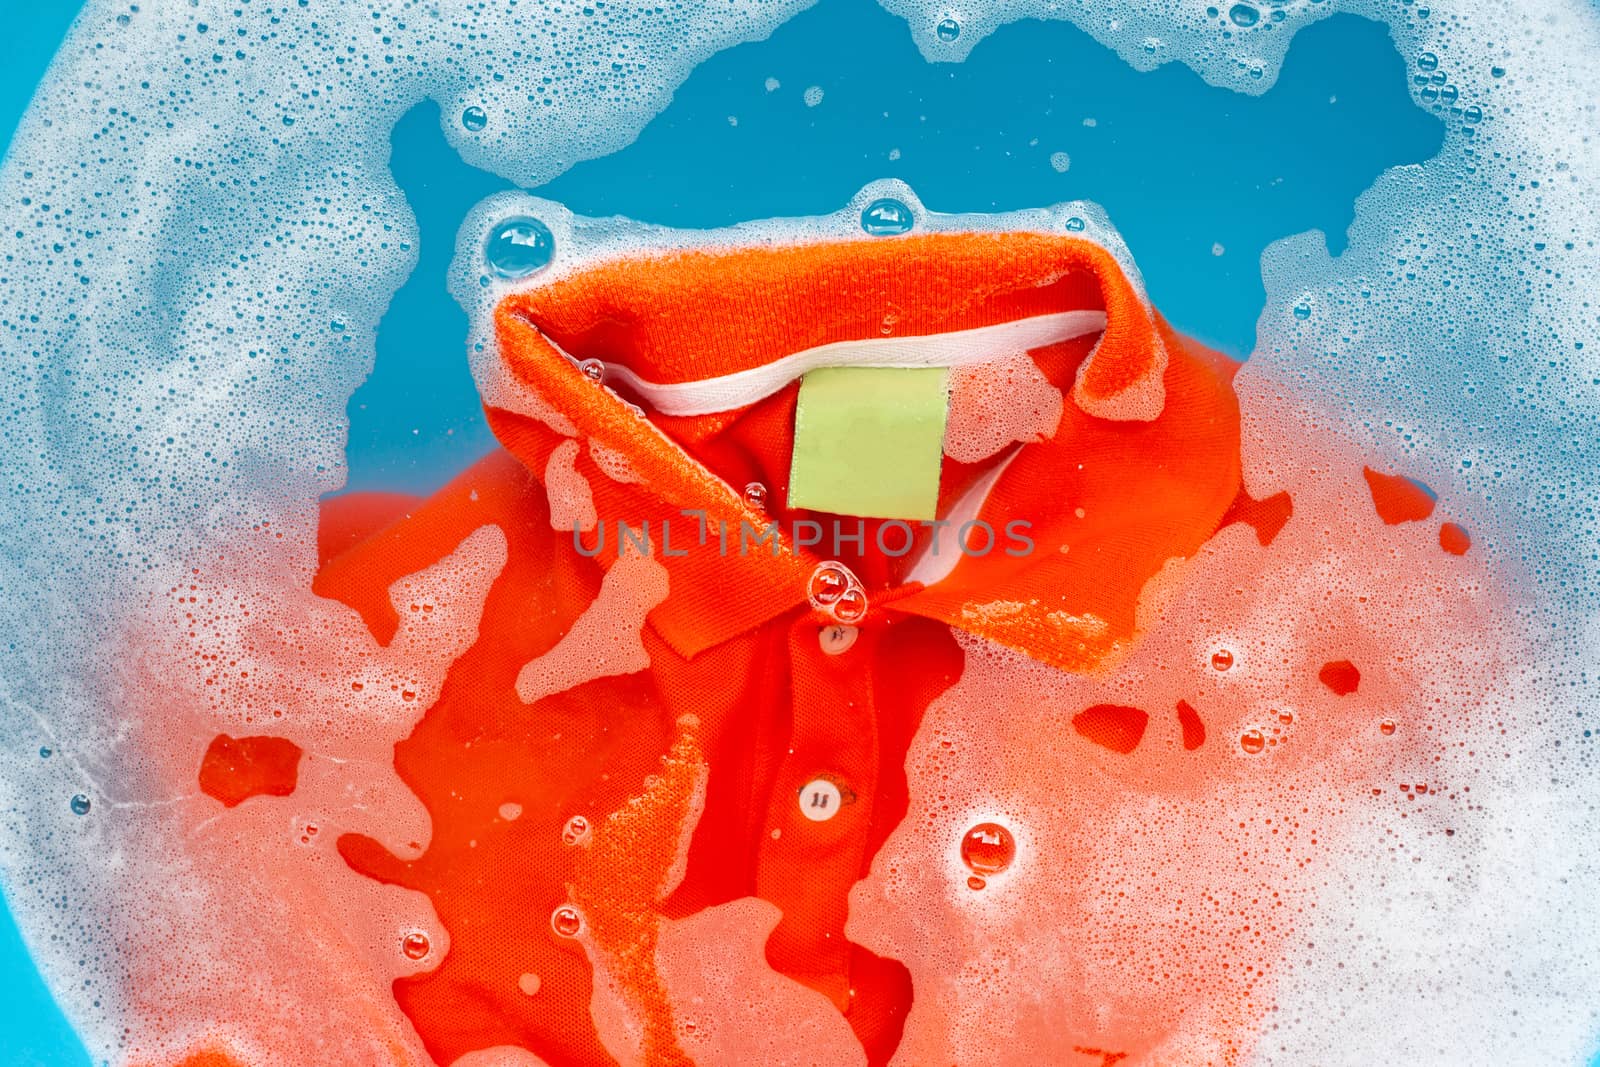 Orange polo shirt soak in powder detergent water dissolution, wa by Bowonpat